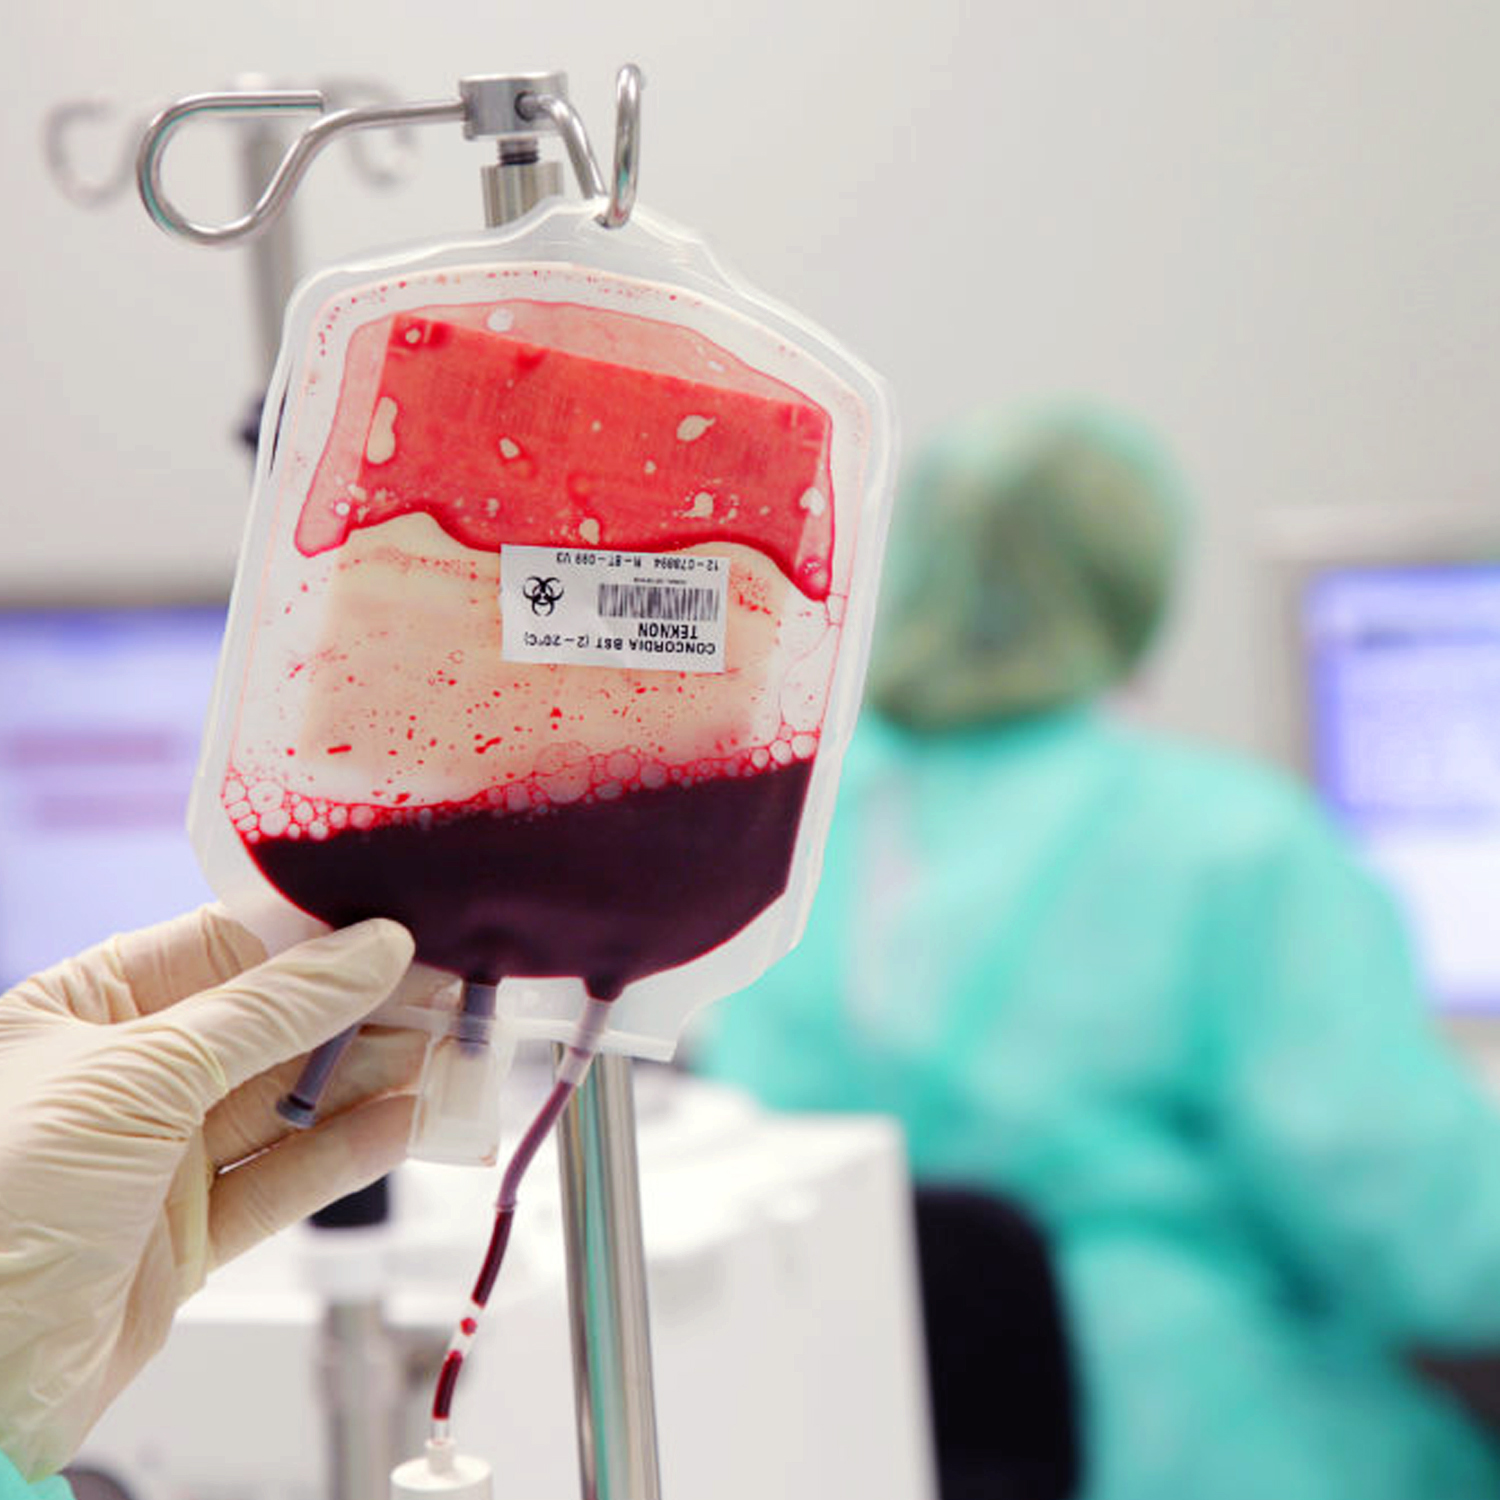 Transfusion medicine